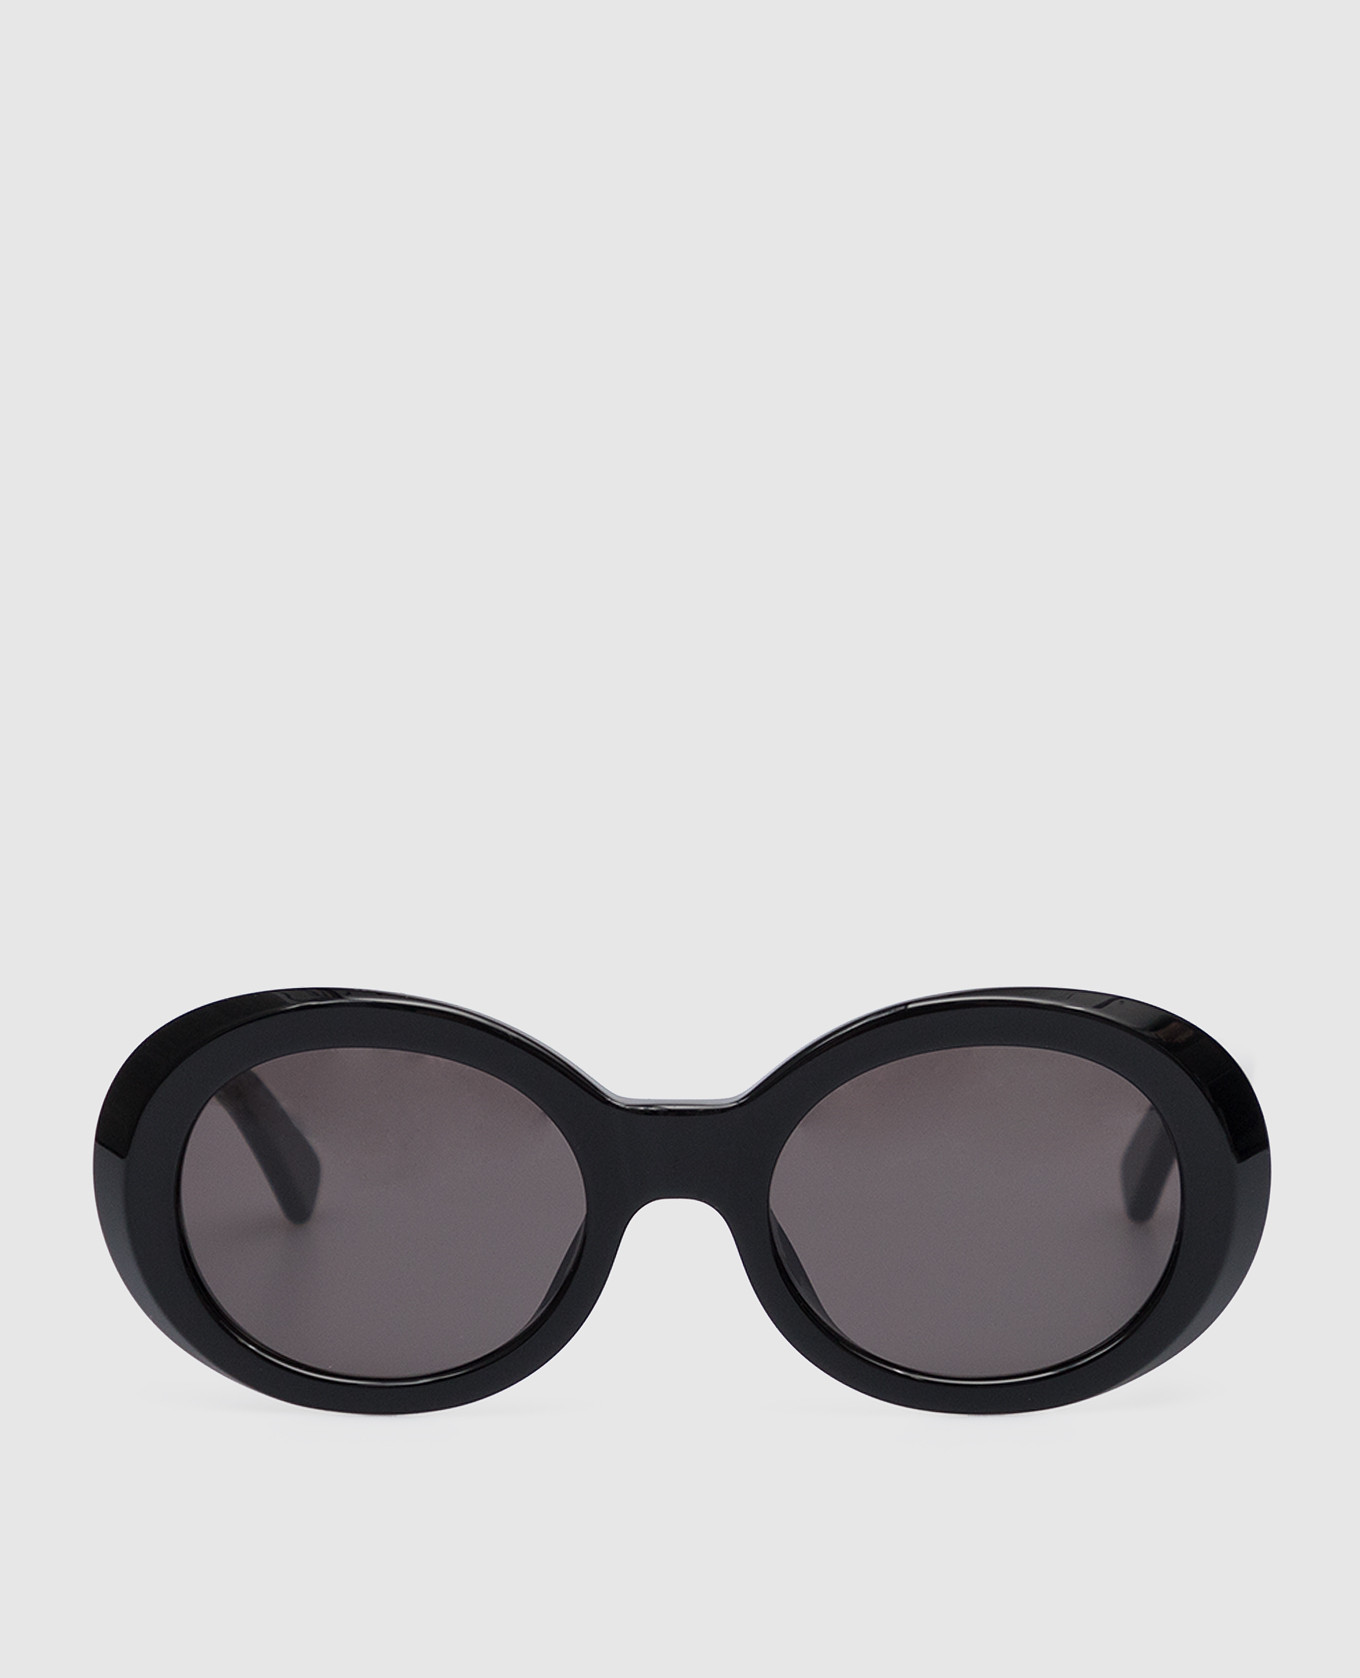 Kurt logo sunglasses in black